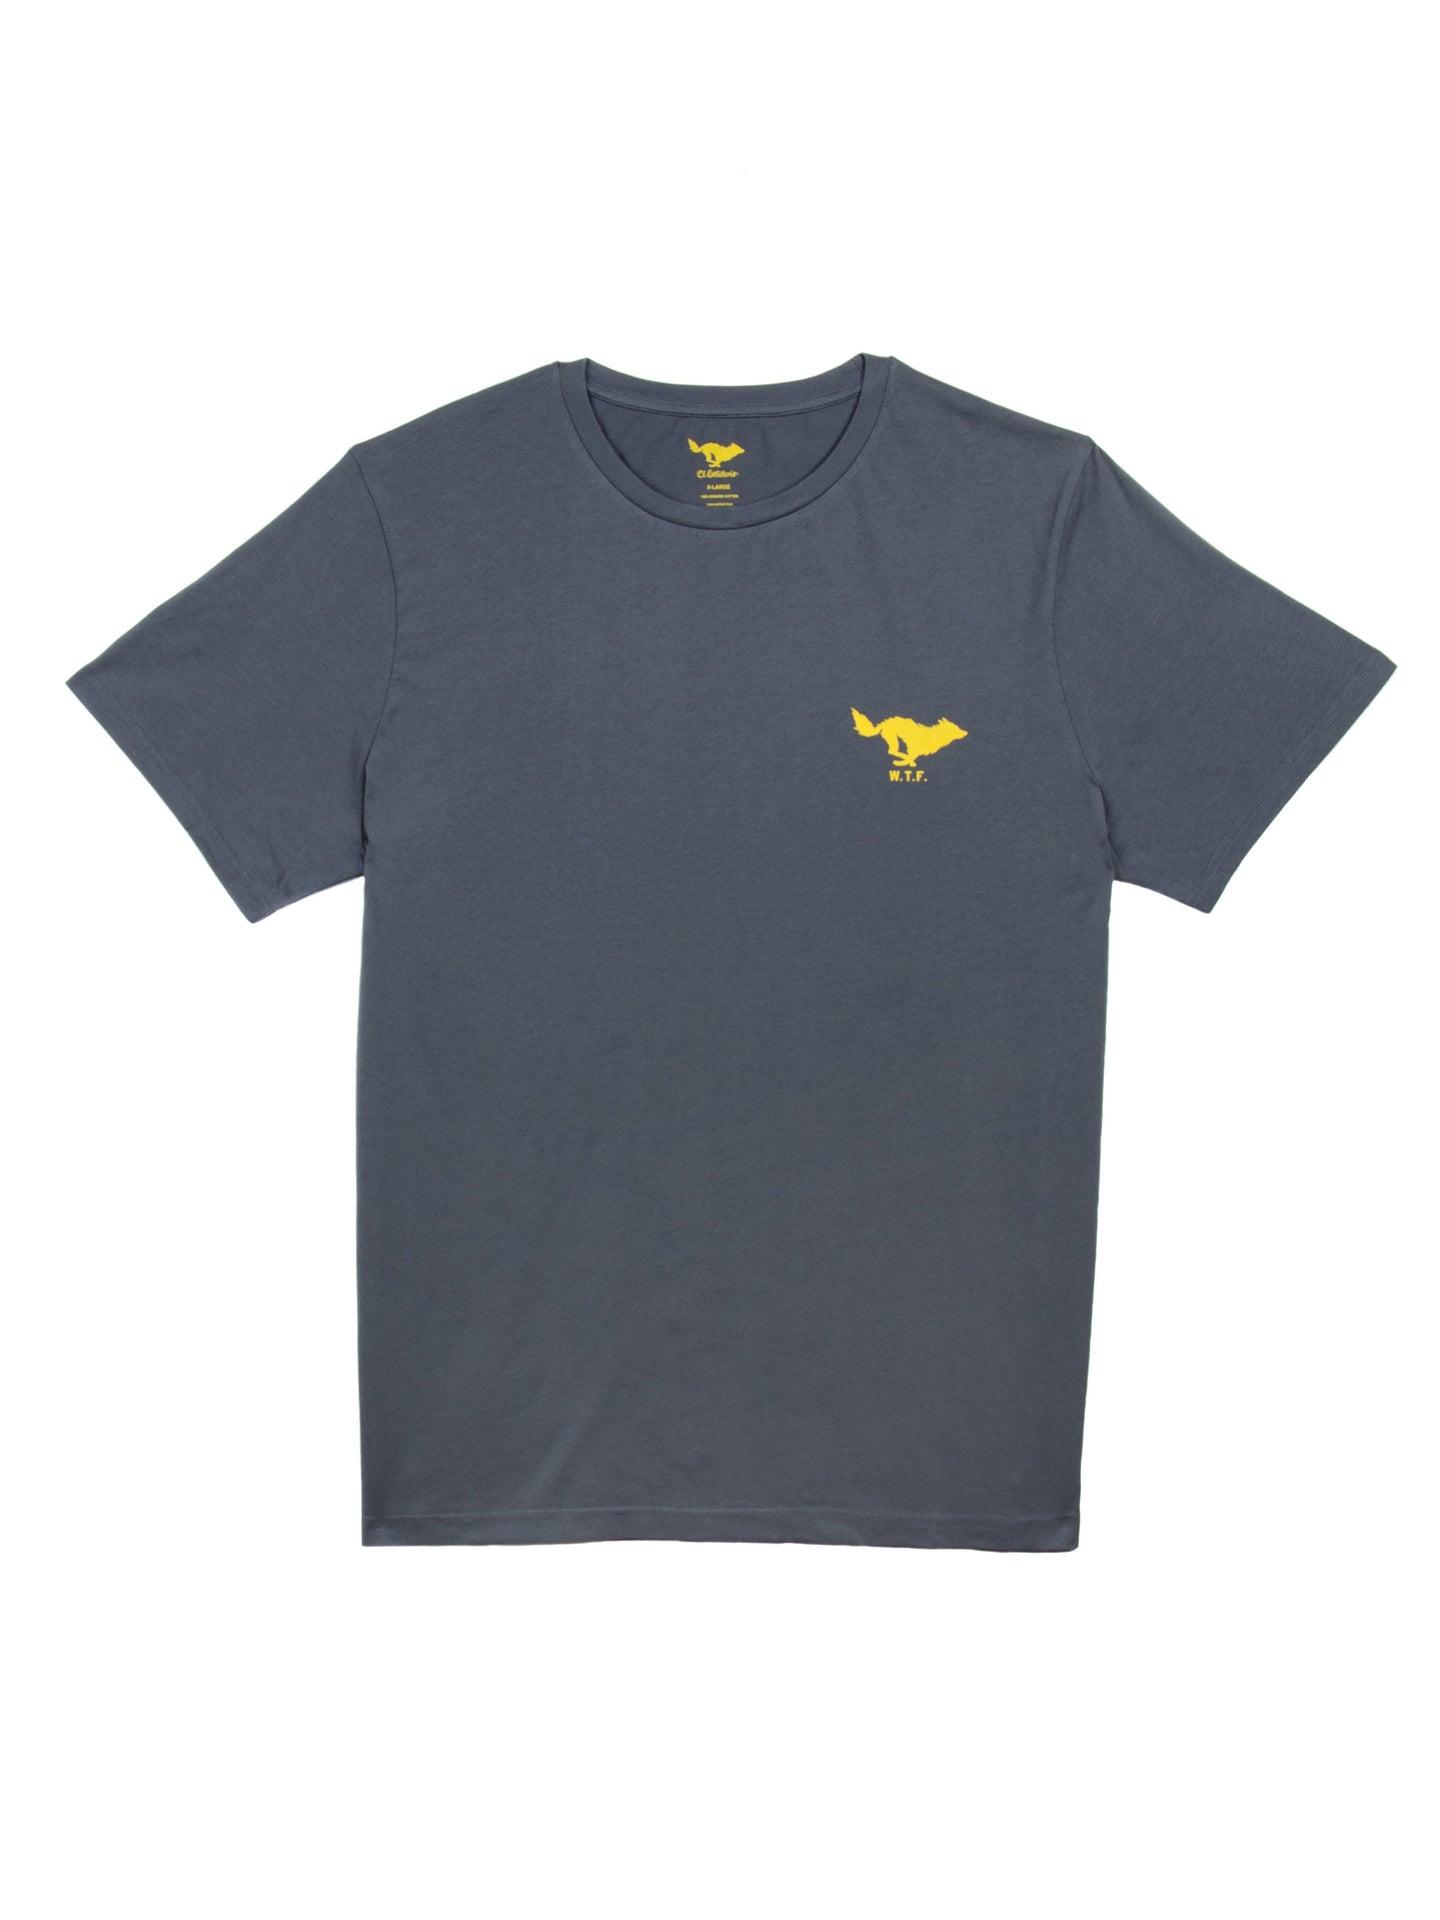 Basic Grey/Yellow T-shirt